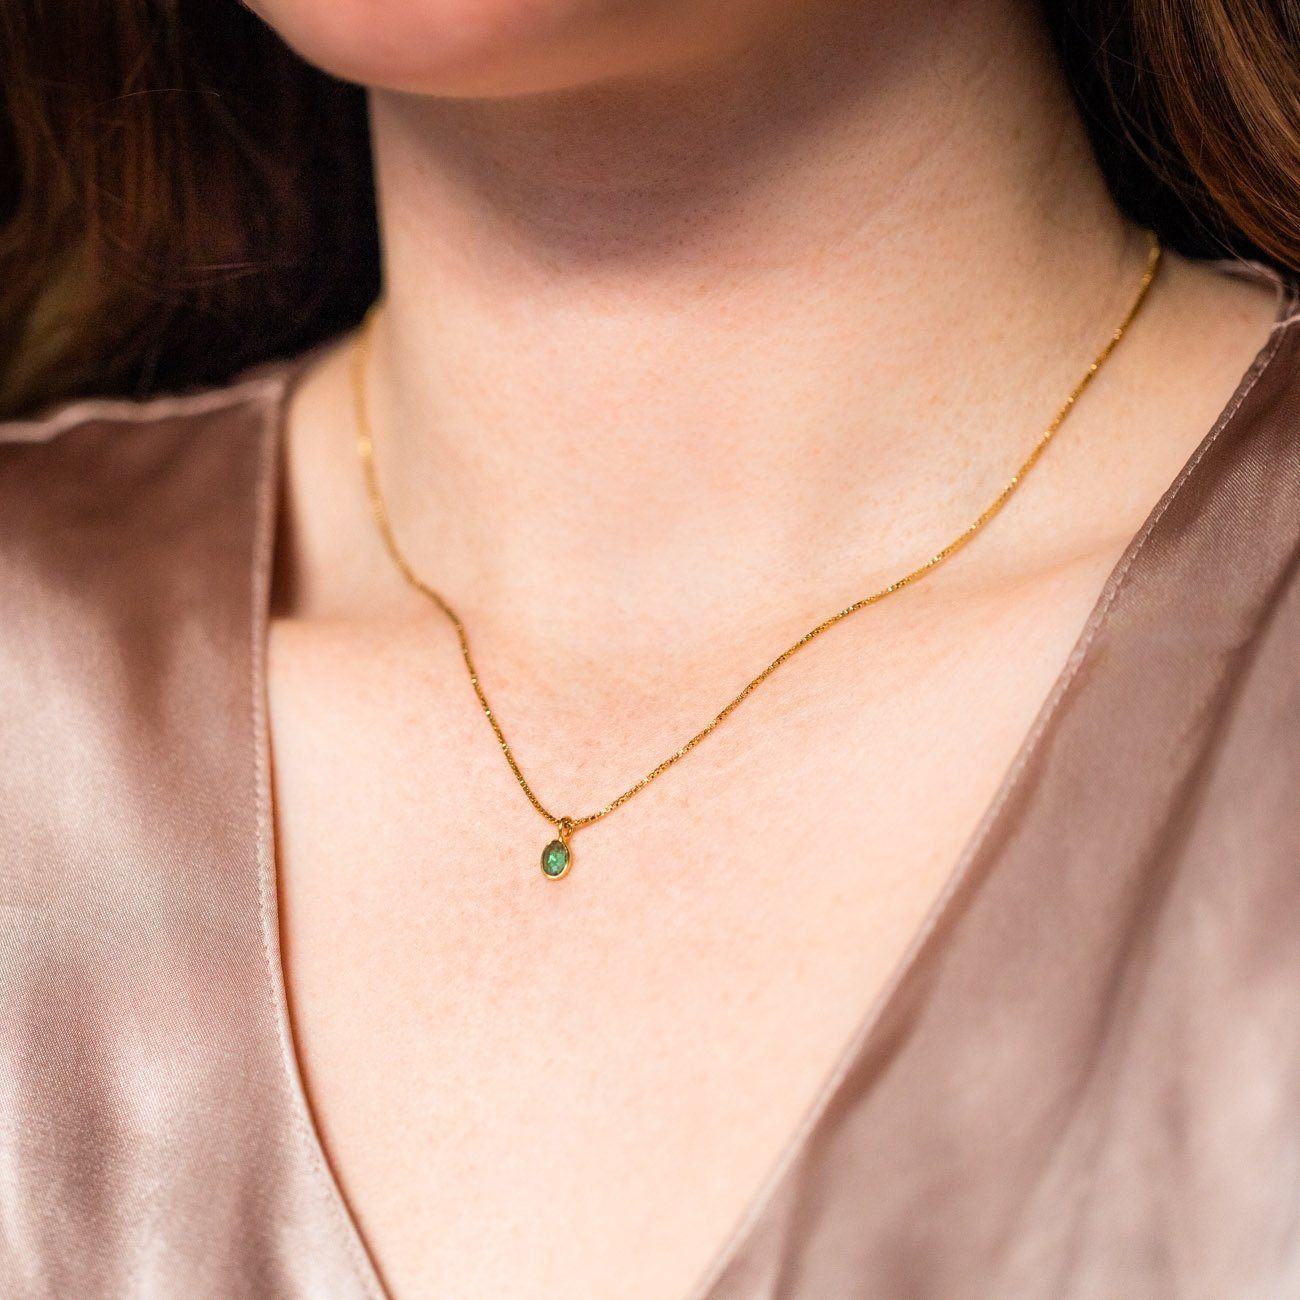 sofia slice necklace with emerald pendant